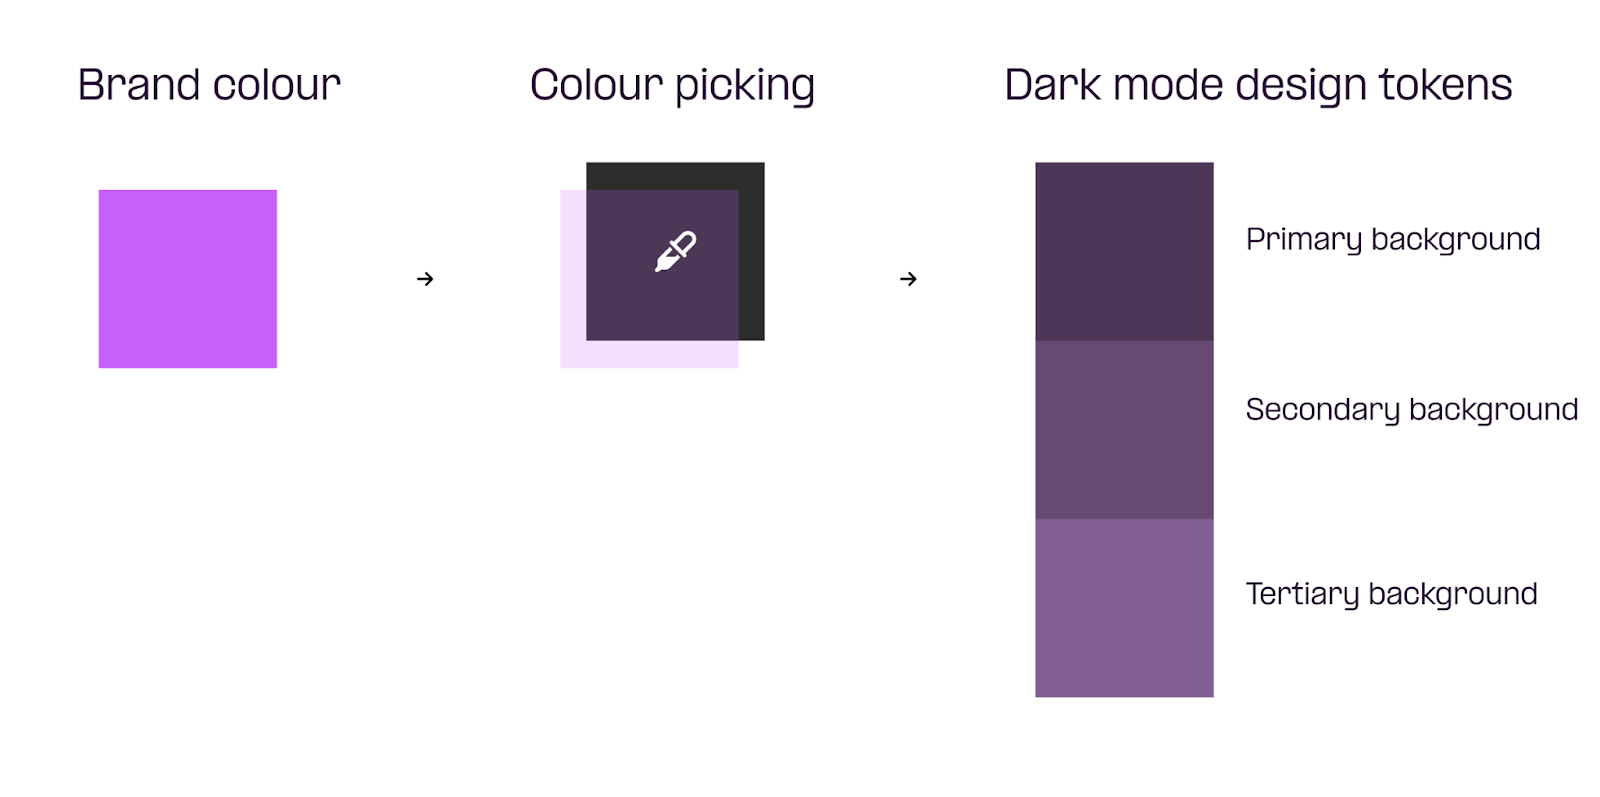 Creating a dark mode colour palette